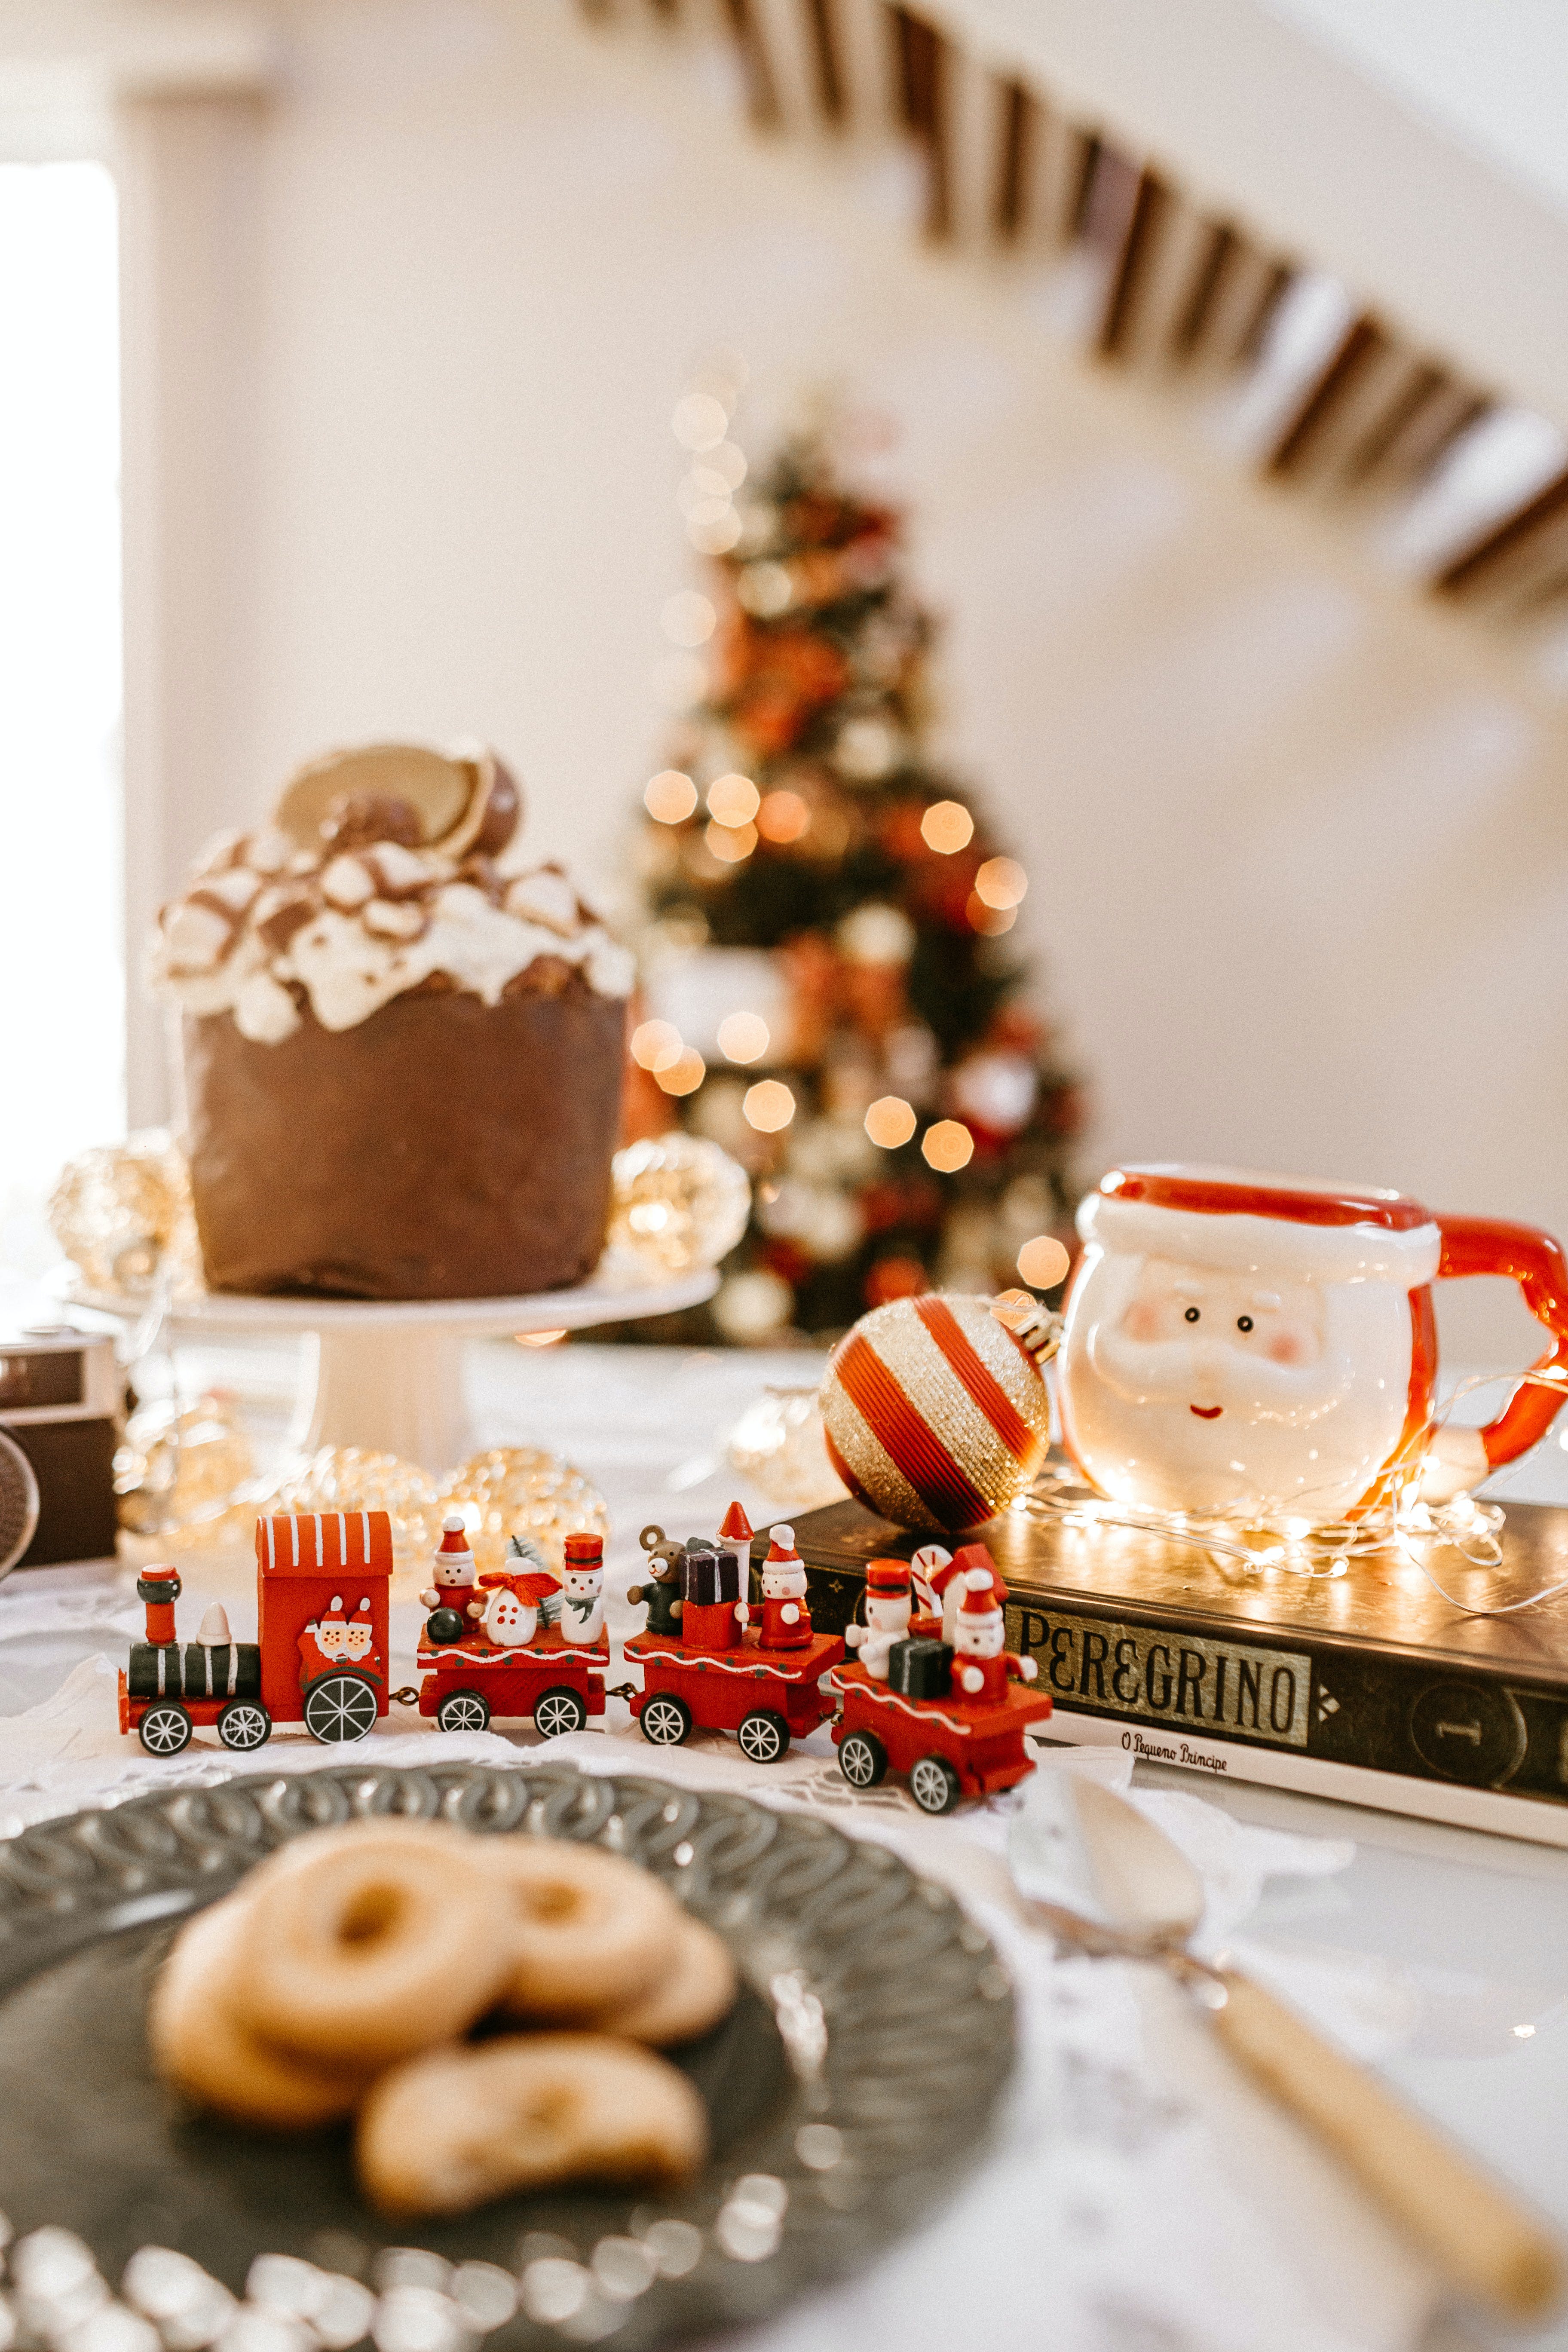 Christmas decoration | Source: Pexels